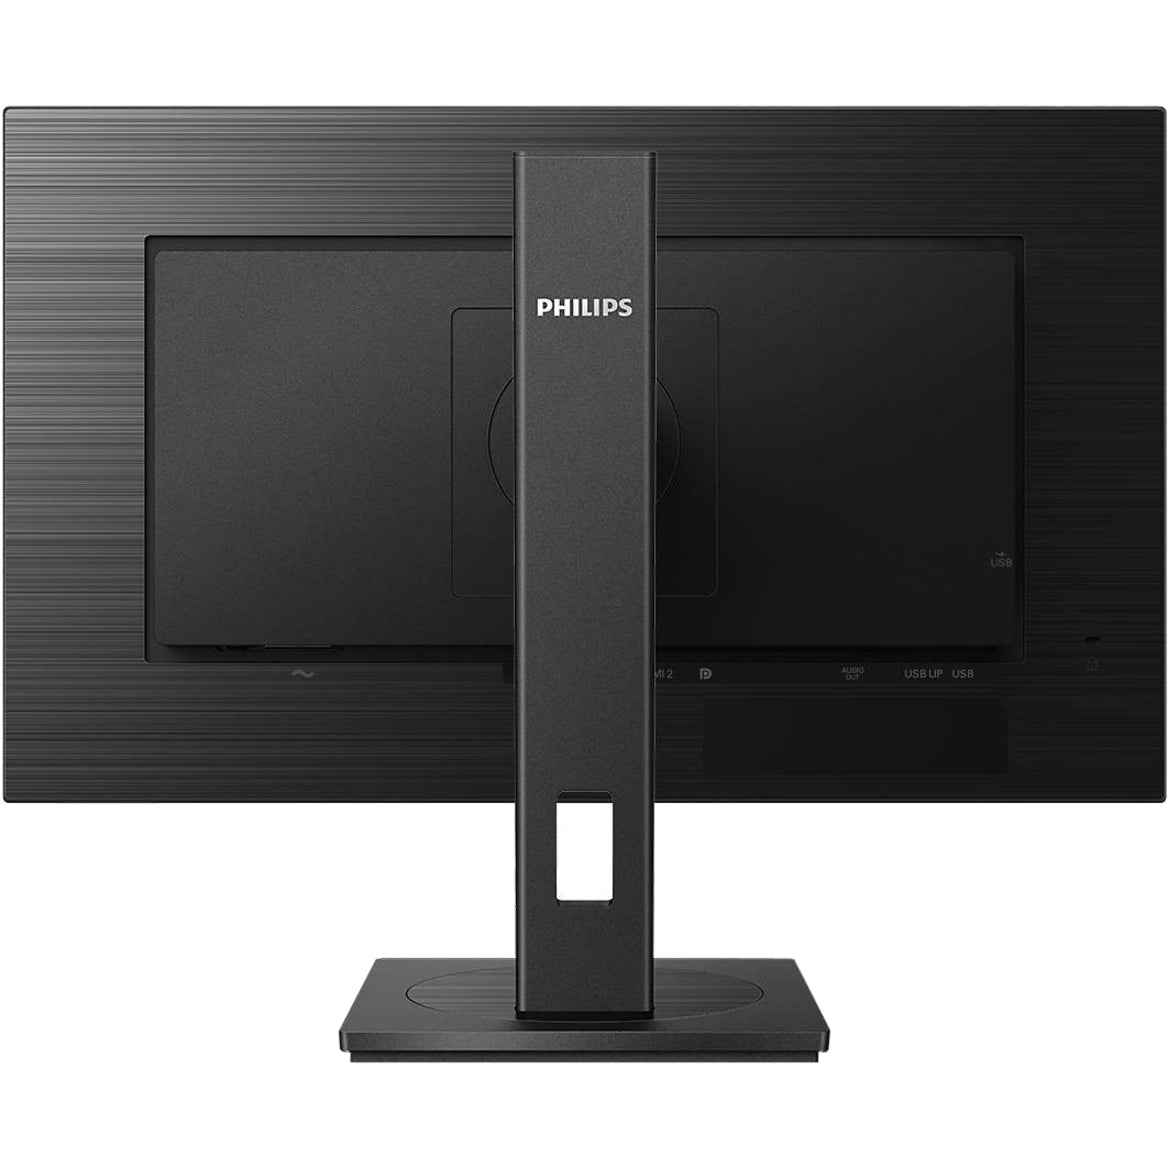 Philips 278B1 27" 4K UHD LCD Monitor, Textured Black - Immersive Visuals, Ergonomic Design, Energy Efficient